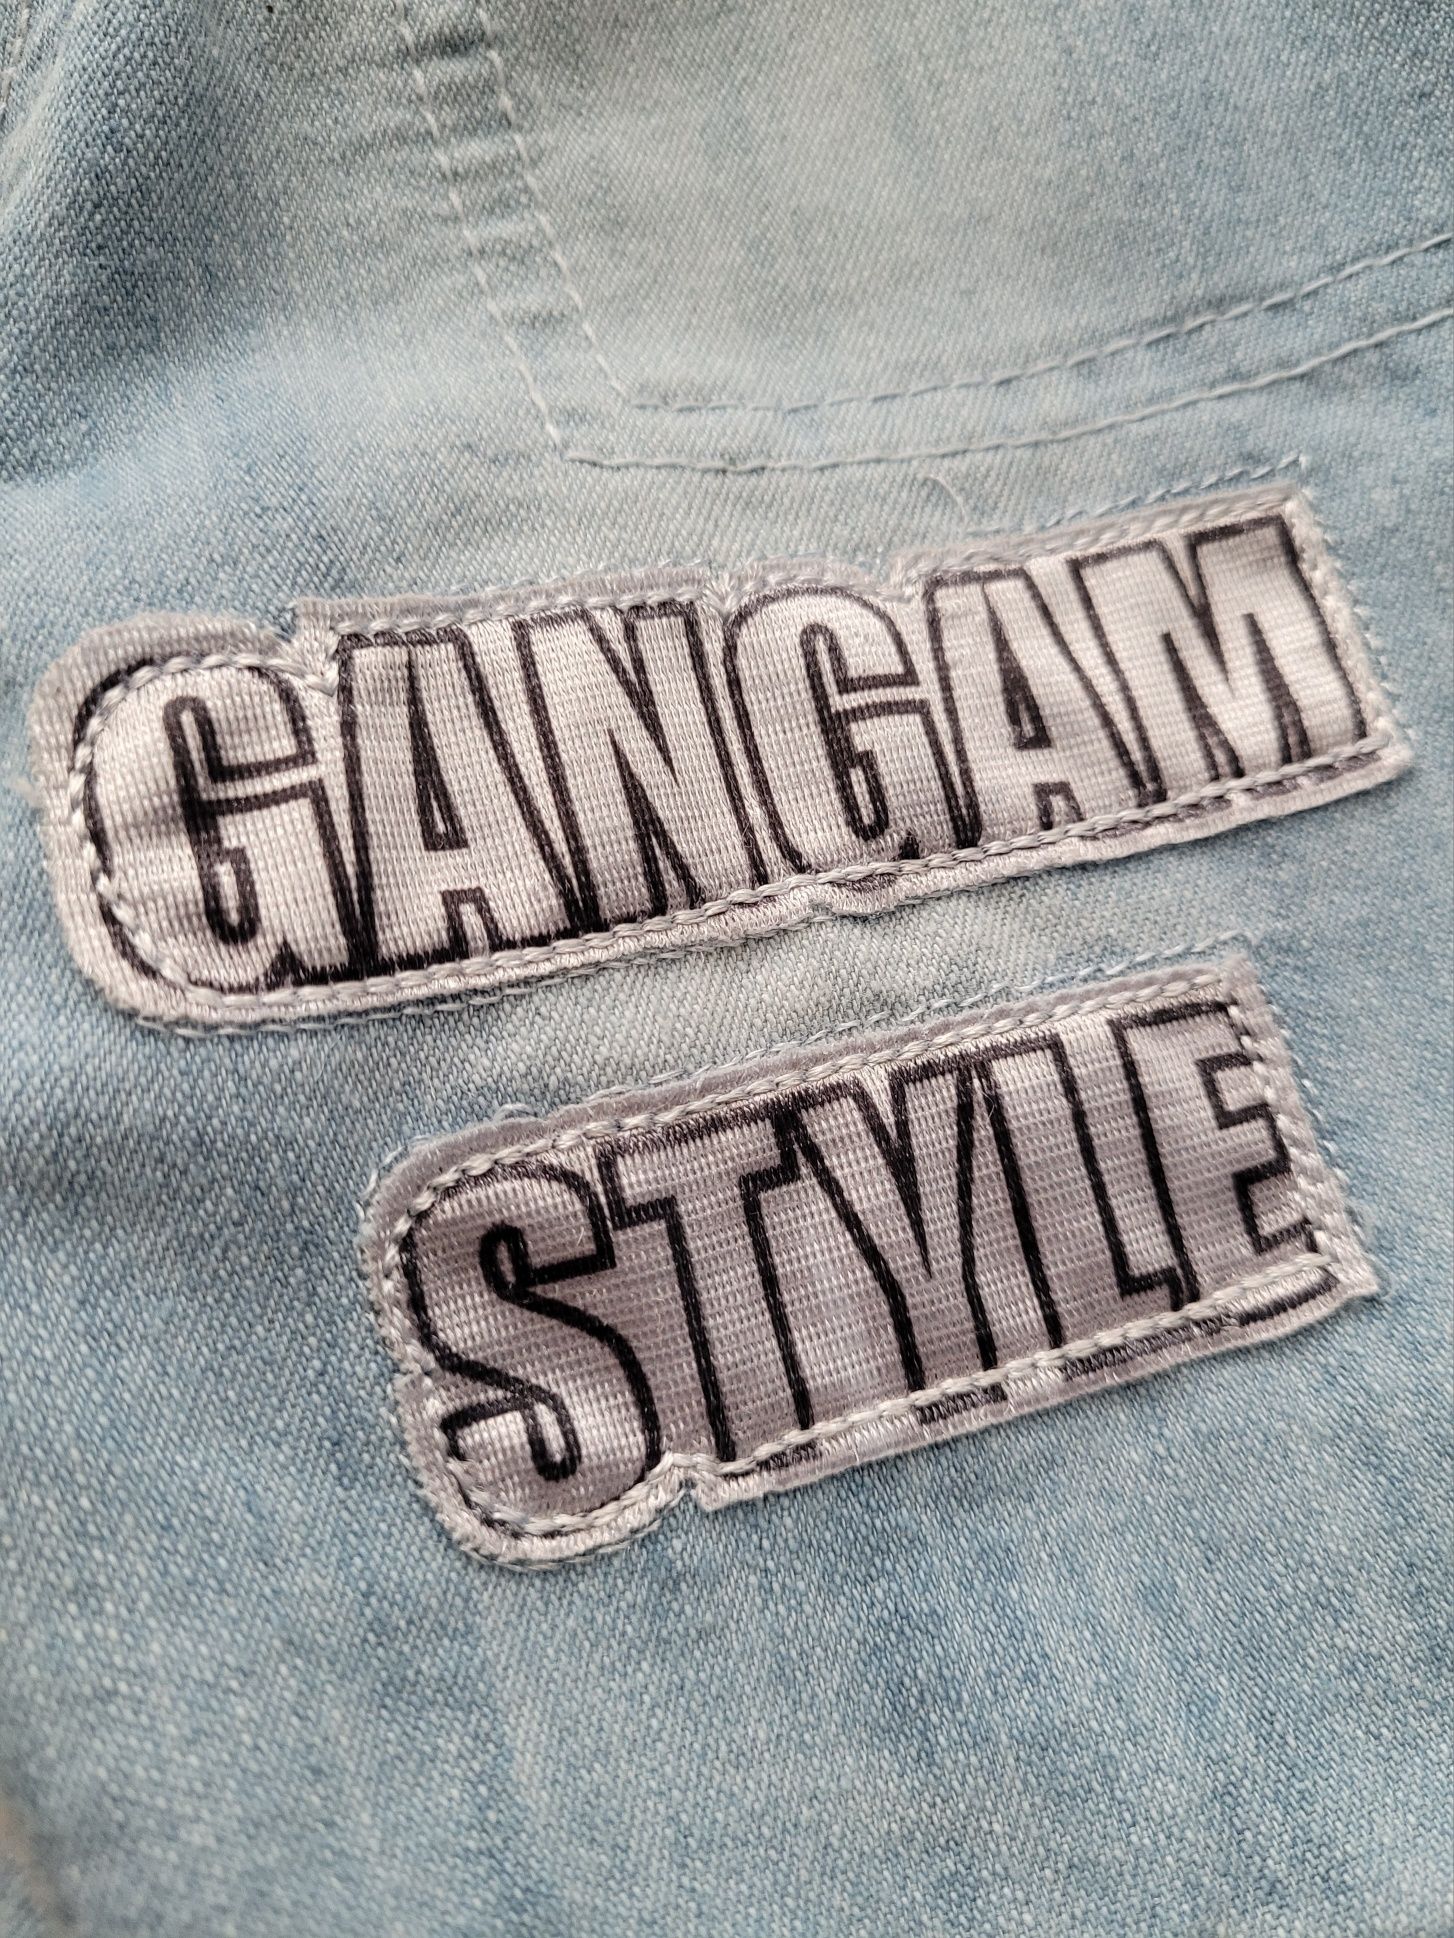 Bluzka / T-shirt + Spodnie Gangam Style